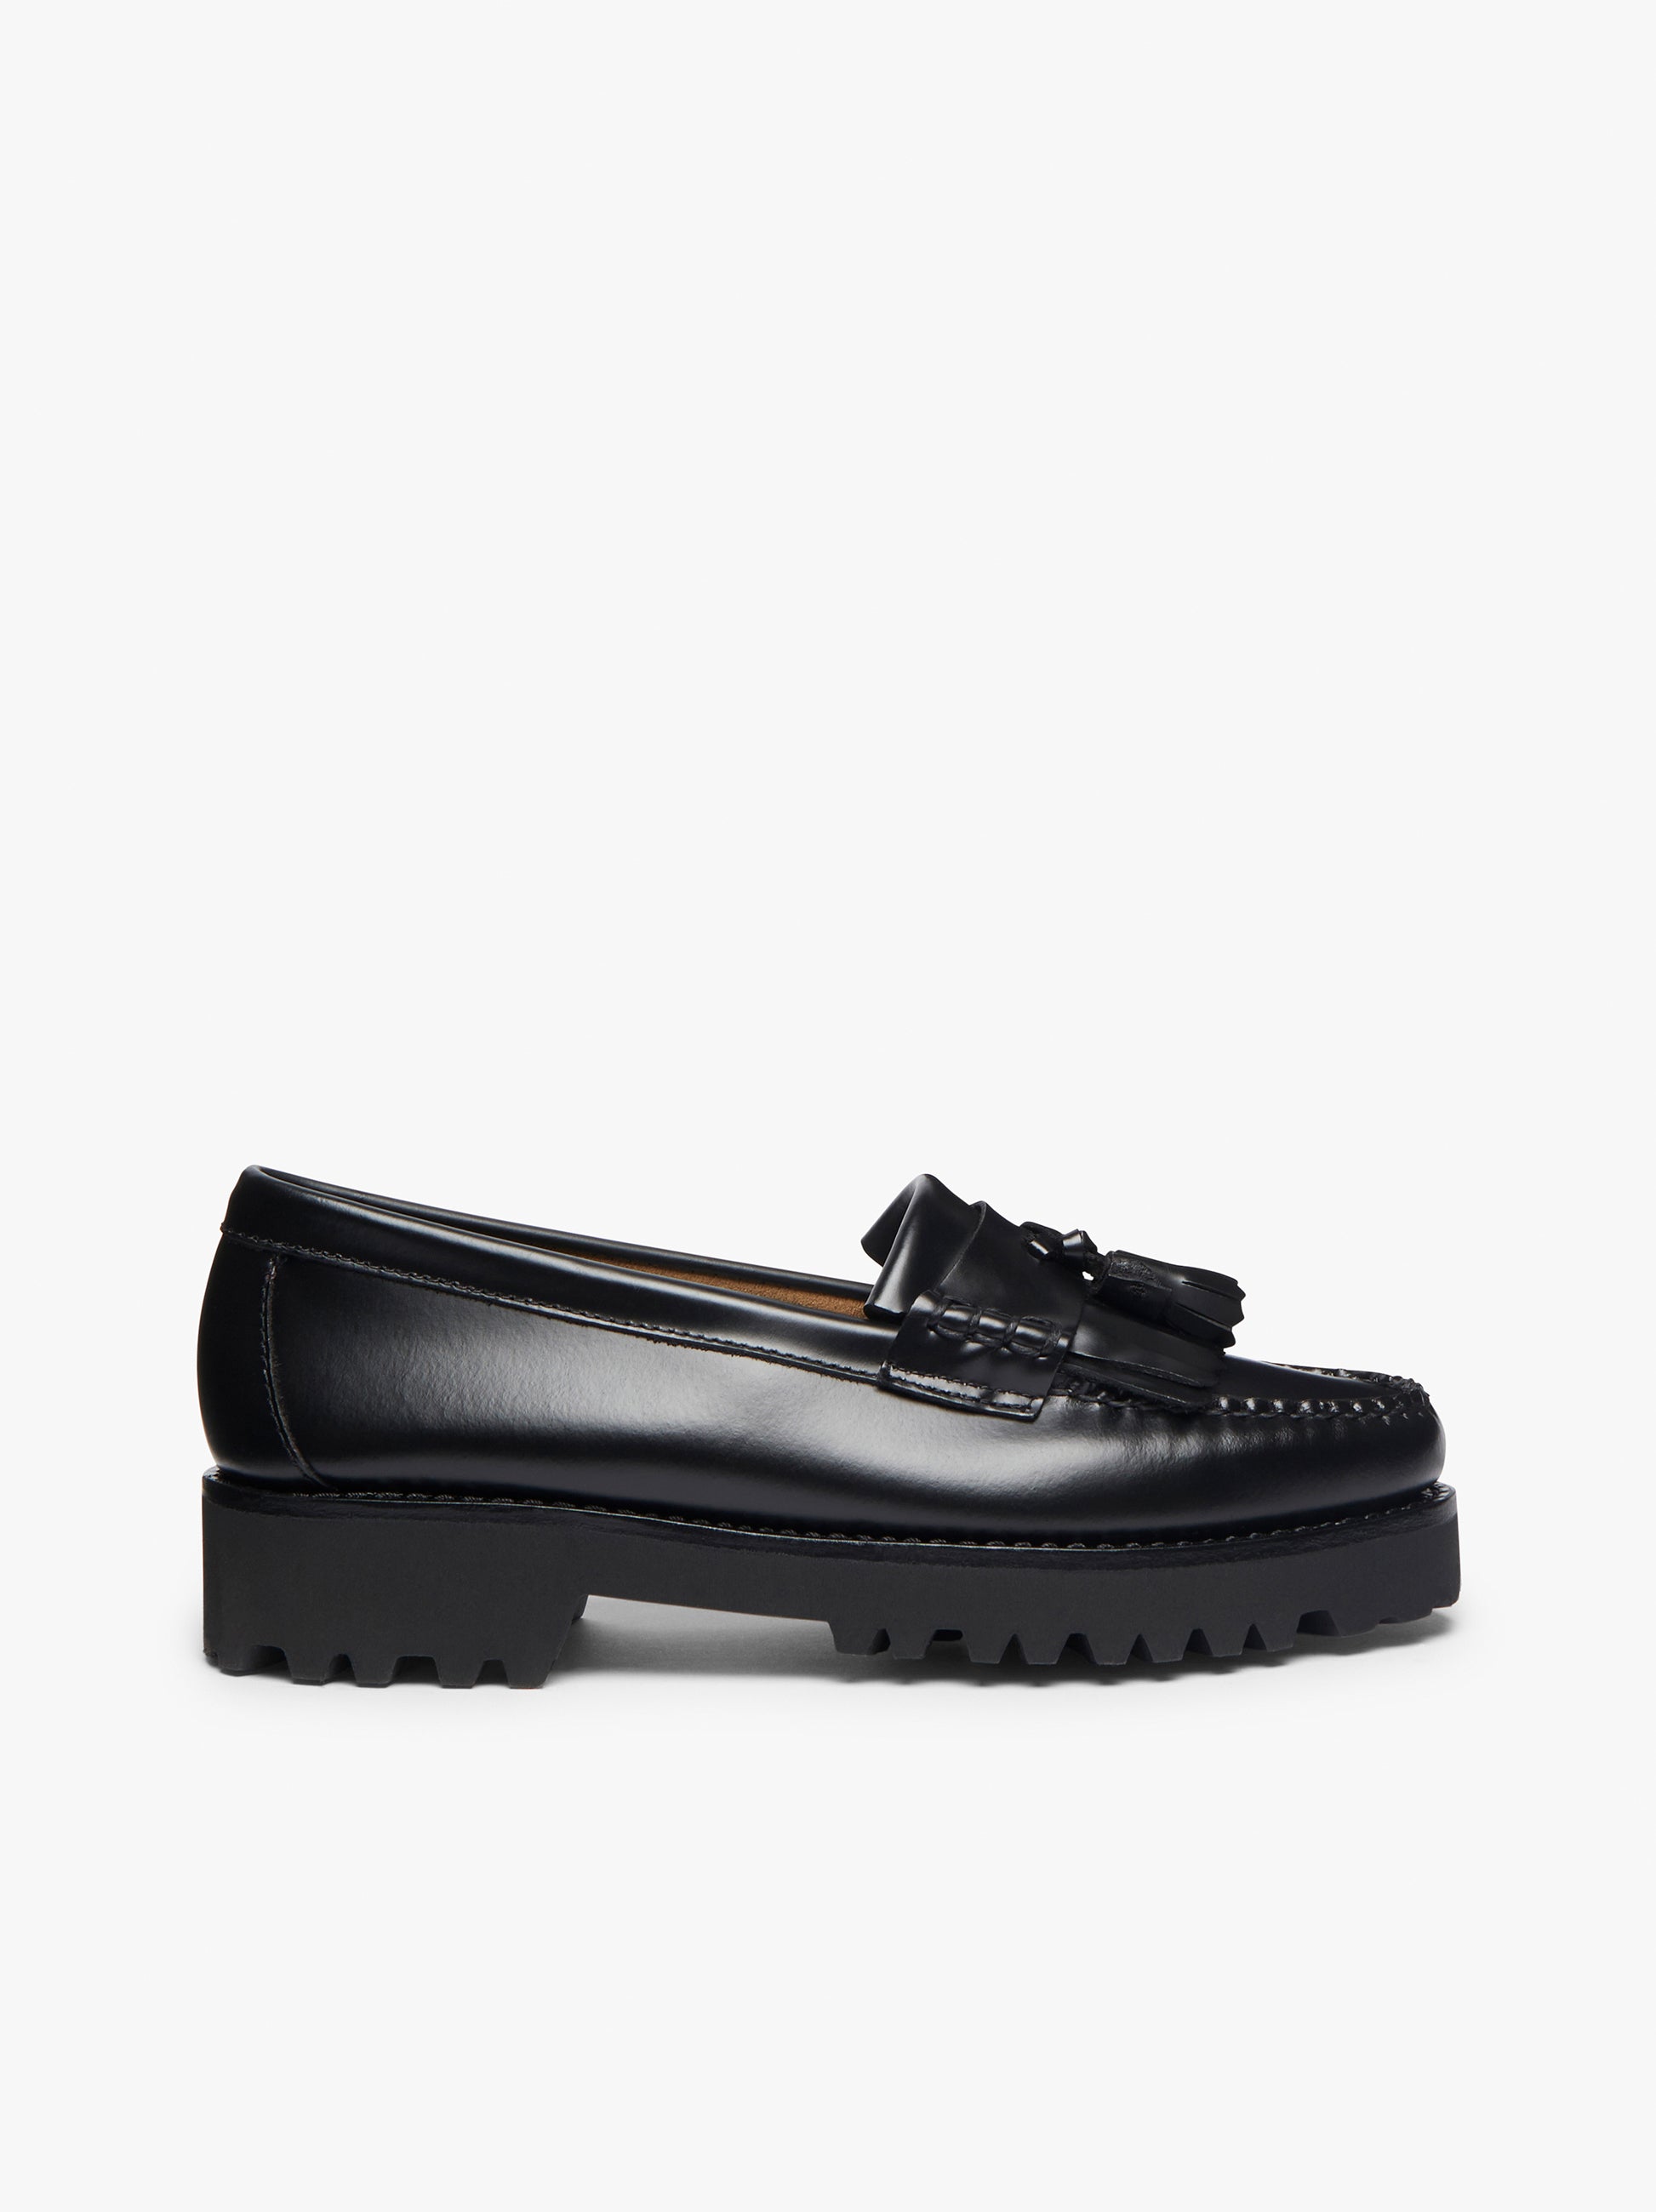 G.H.BASS Kiltie Tassel Loafer | Black Leather Tassel Loafers